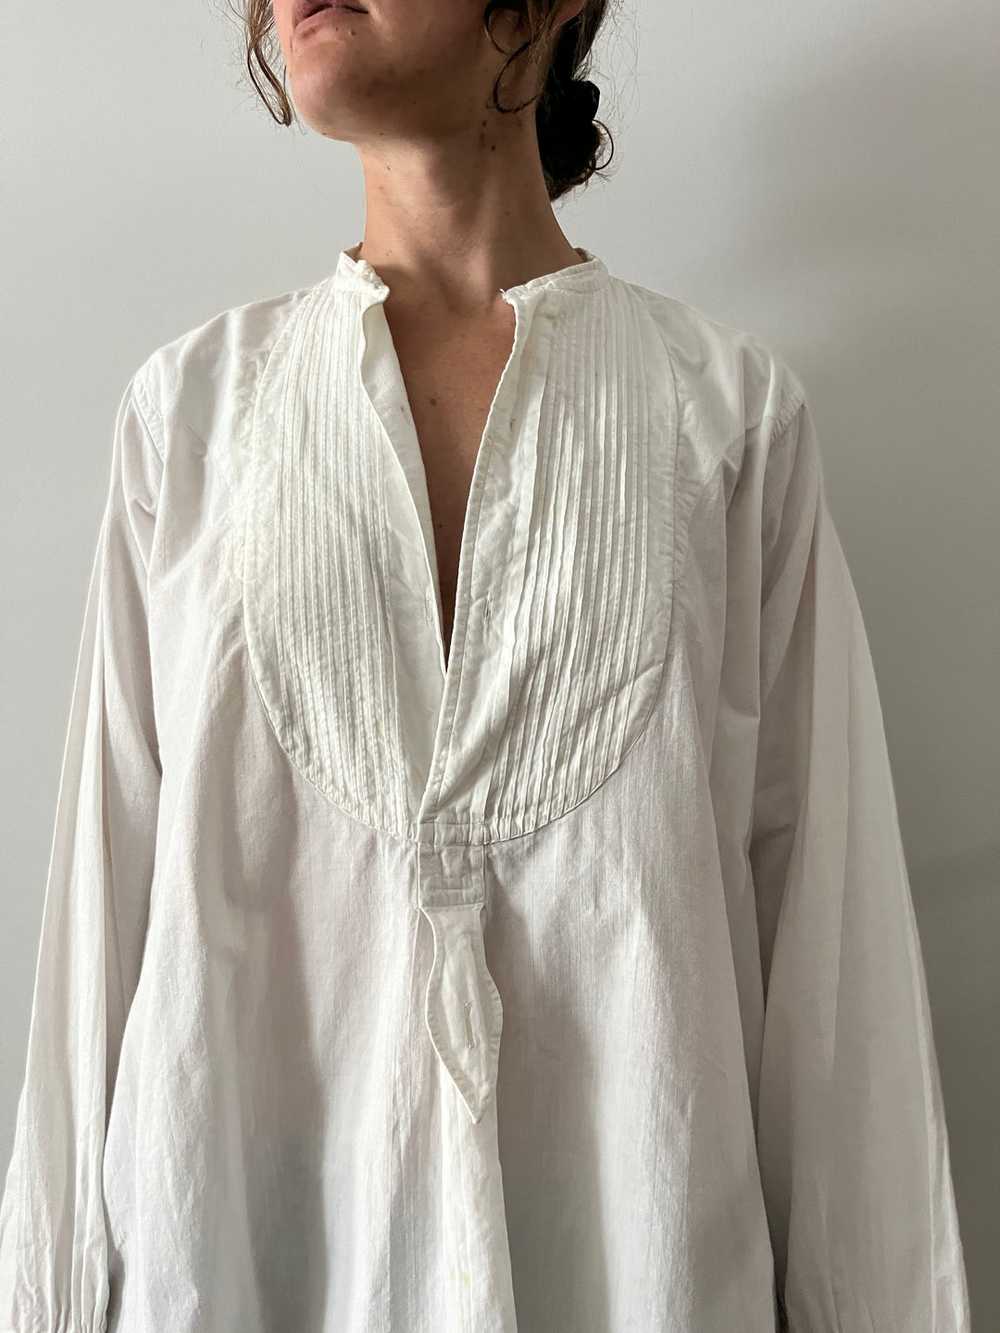 20s/30s French White Dress Shirt - image 3